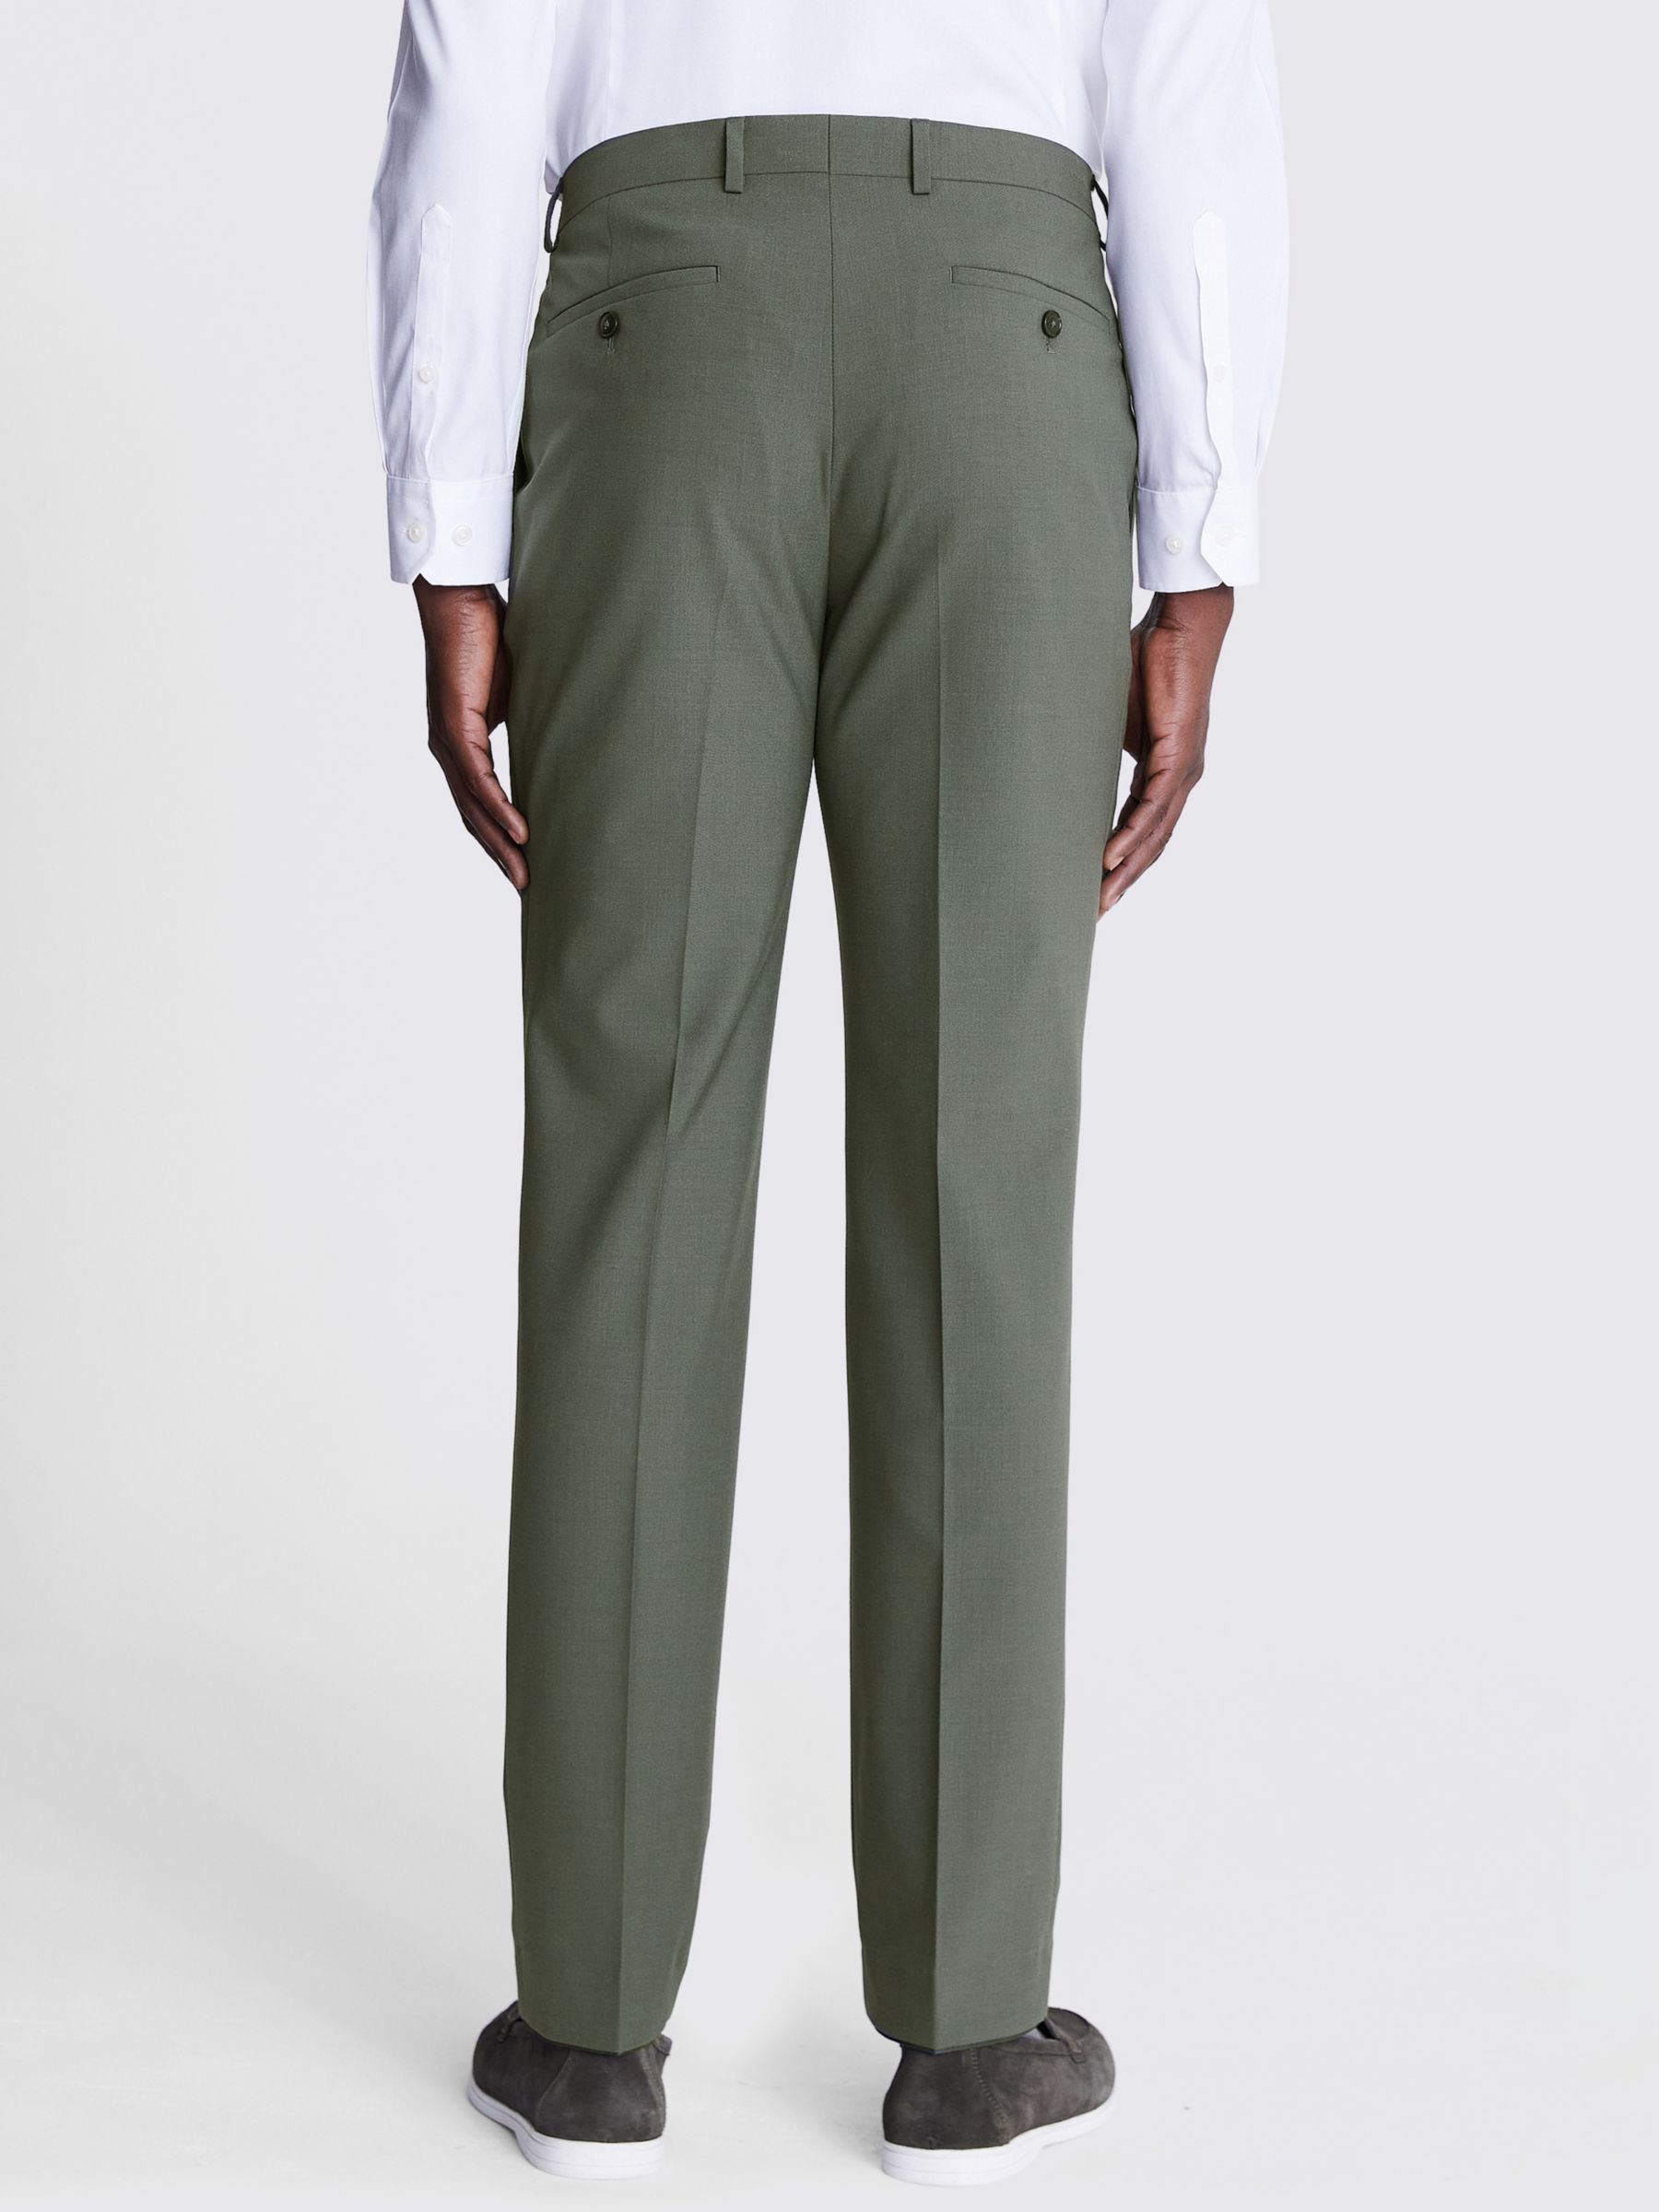 Moss x DKNY Slim Fit Wool Blend Suit Trousers, Sage Green, 32L